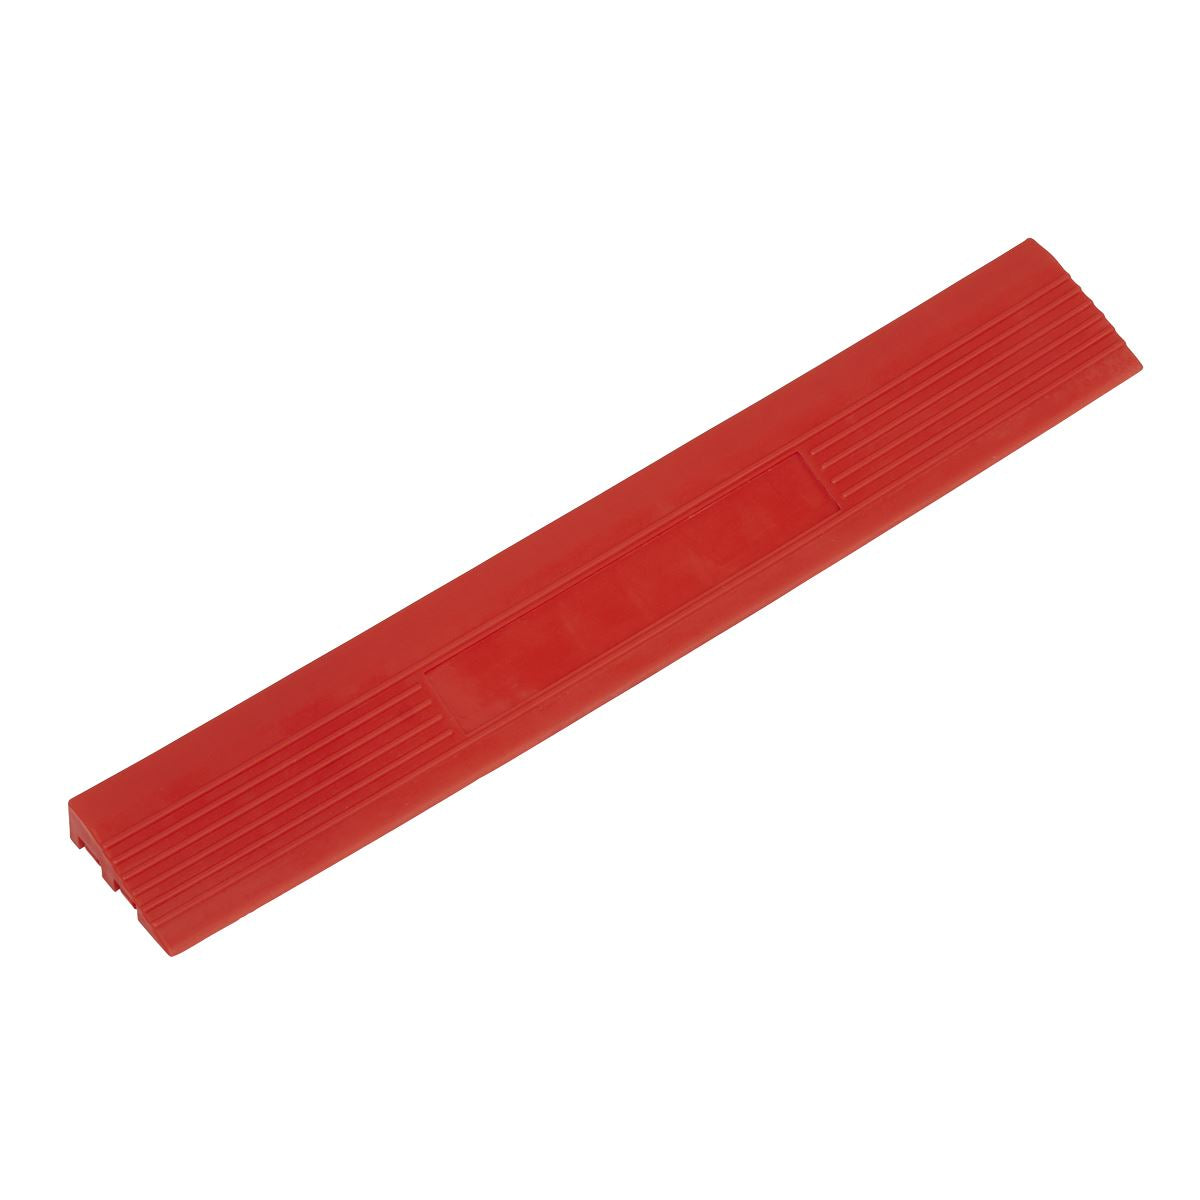 Sealey Polypropylene Floor Tile Edge 400 x 60mm Red Male - Pack of 6